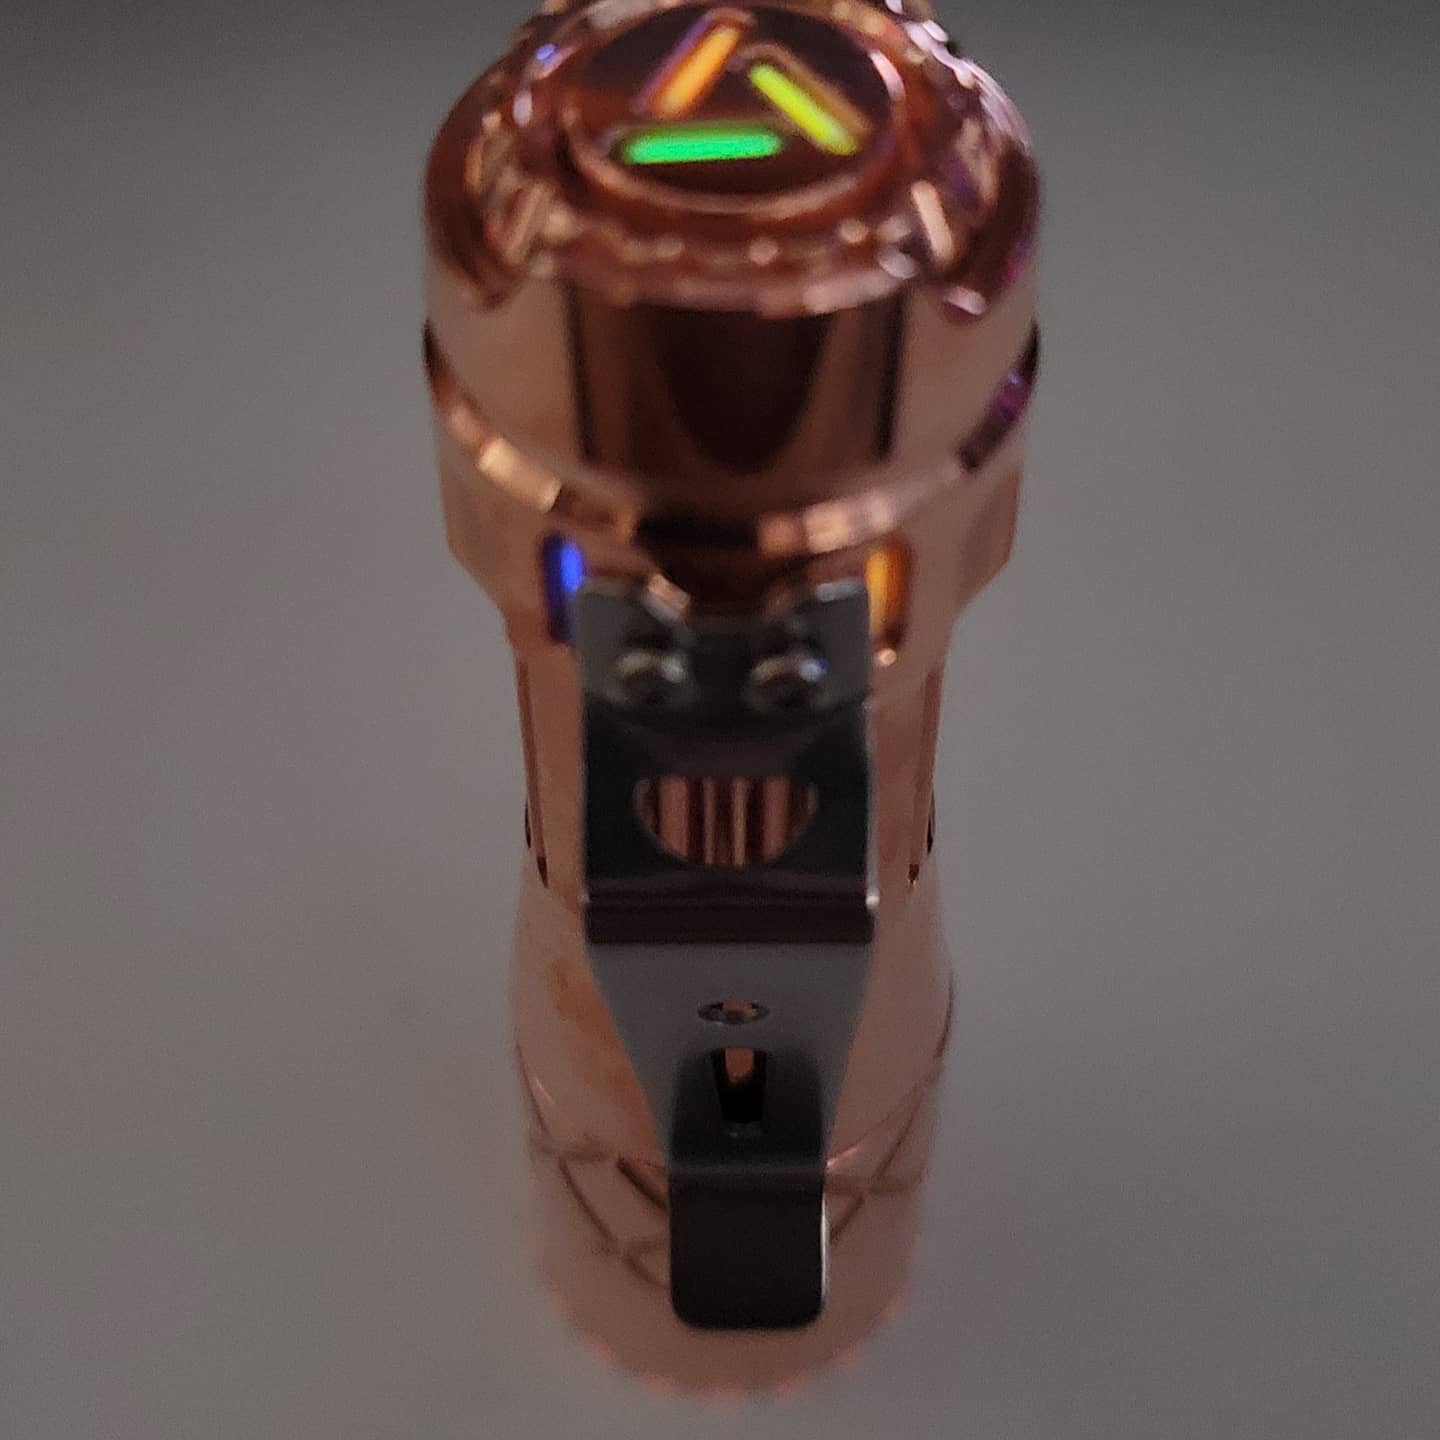 Lumintop LM10 Copper 9 x Tritium + Glow Gasket Custom LED Flashlight